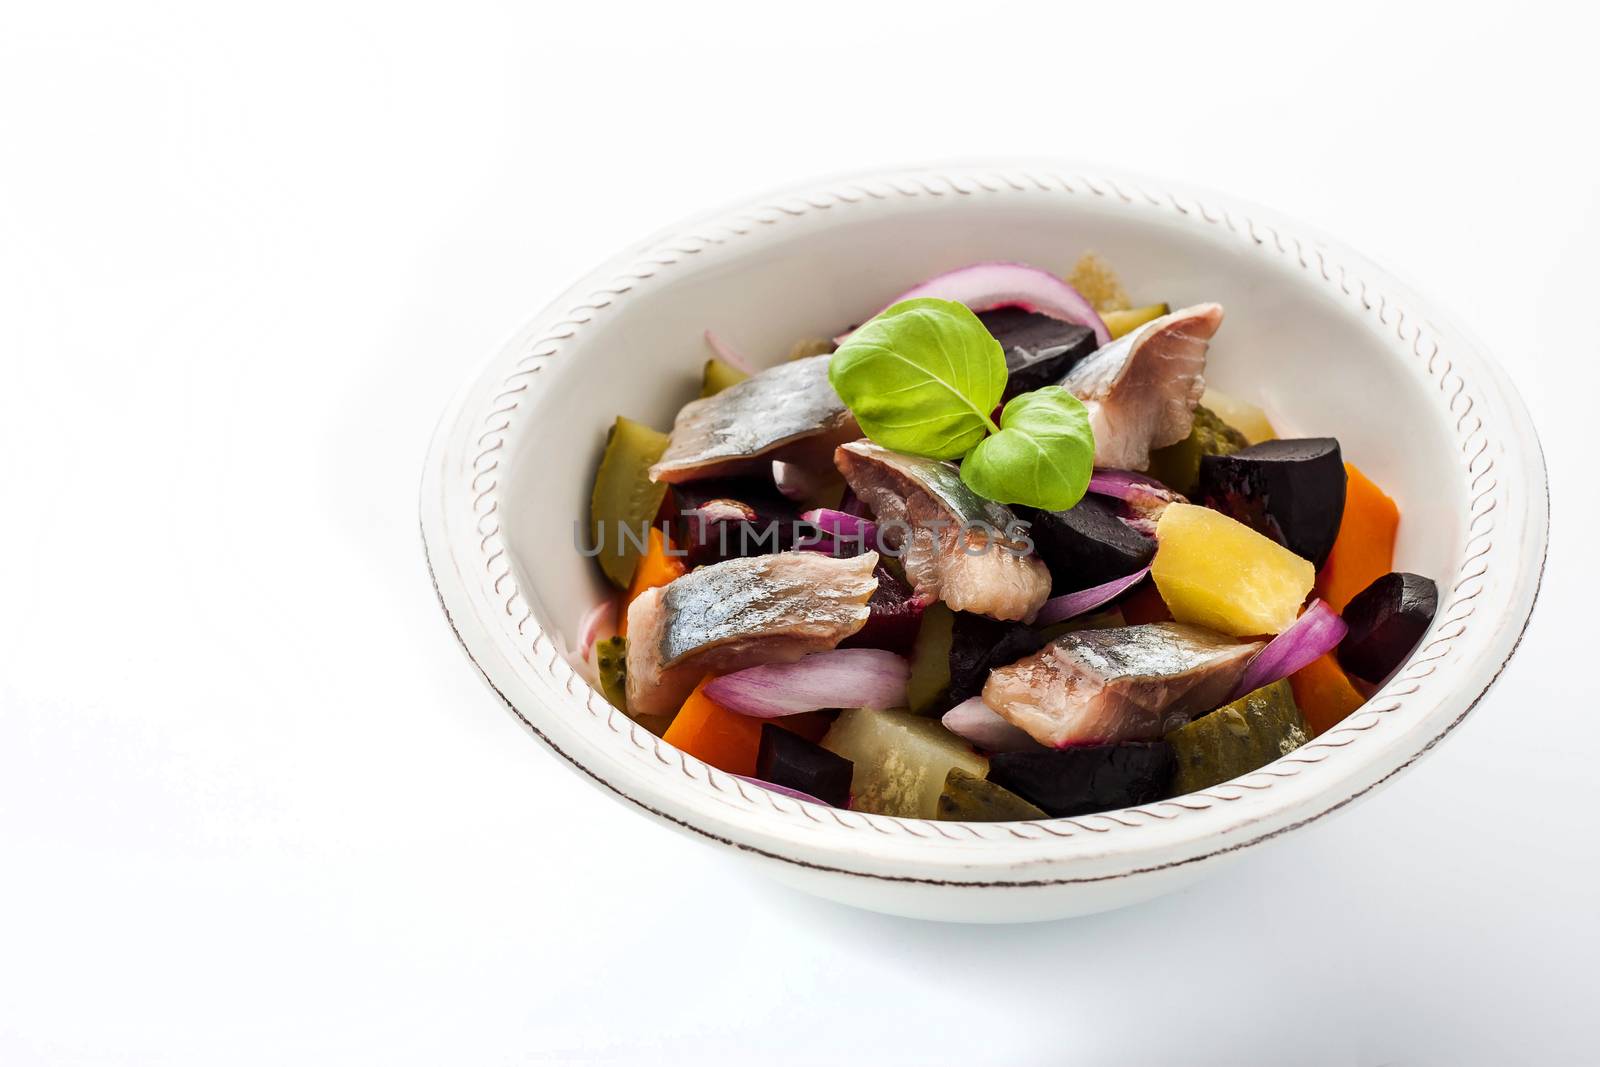 Salad with beet and herring by Deniskarpenkov